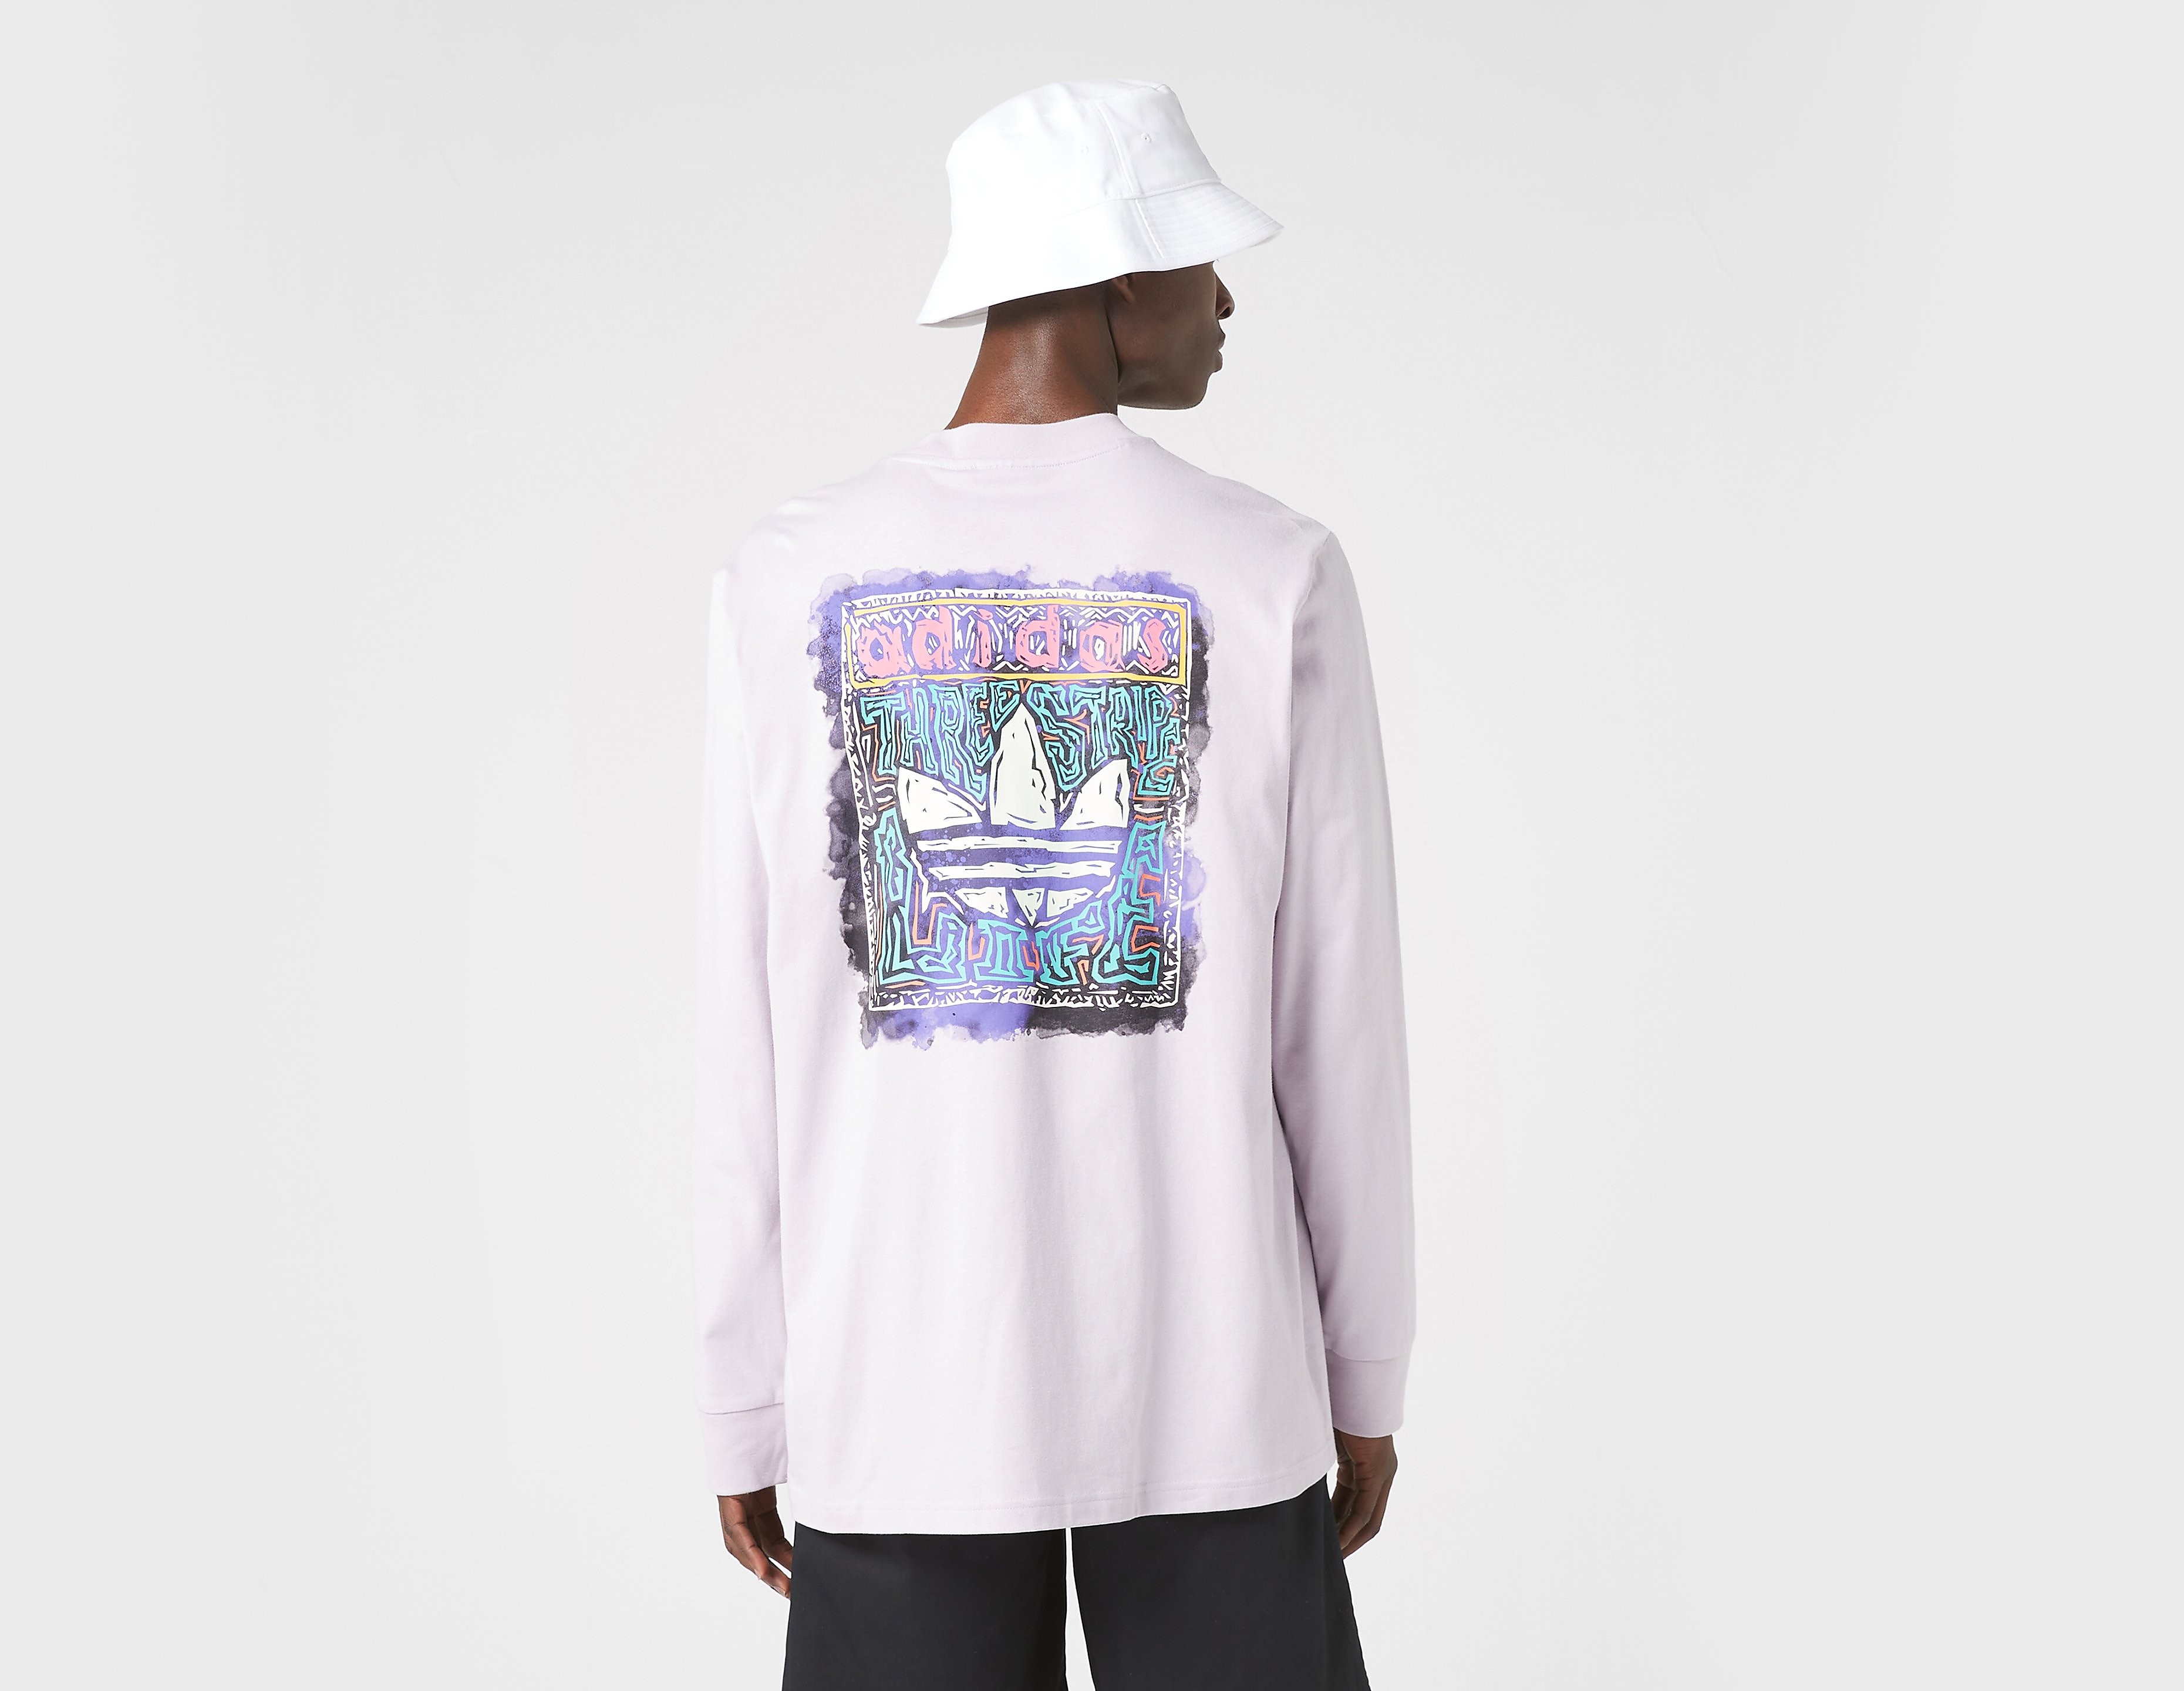 Adidas Originals Skateboarding Long Sleeve Graphic T-Shirt